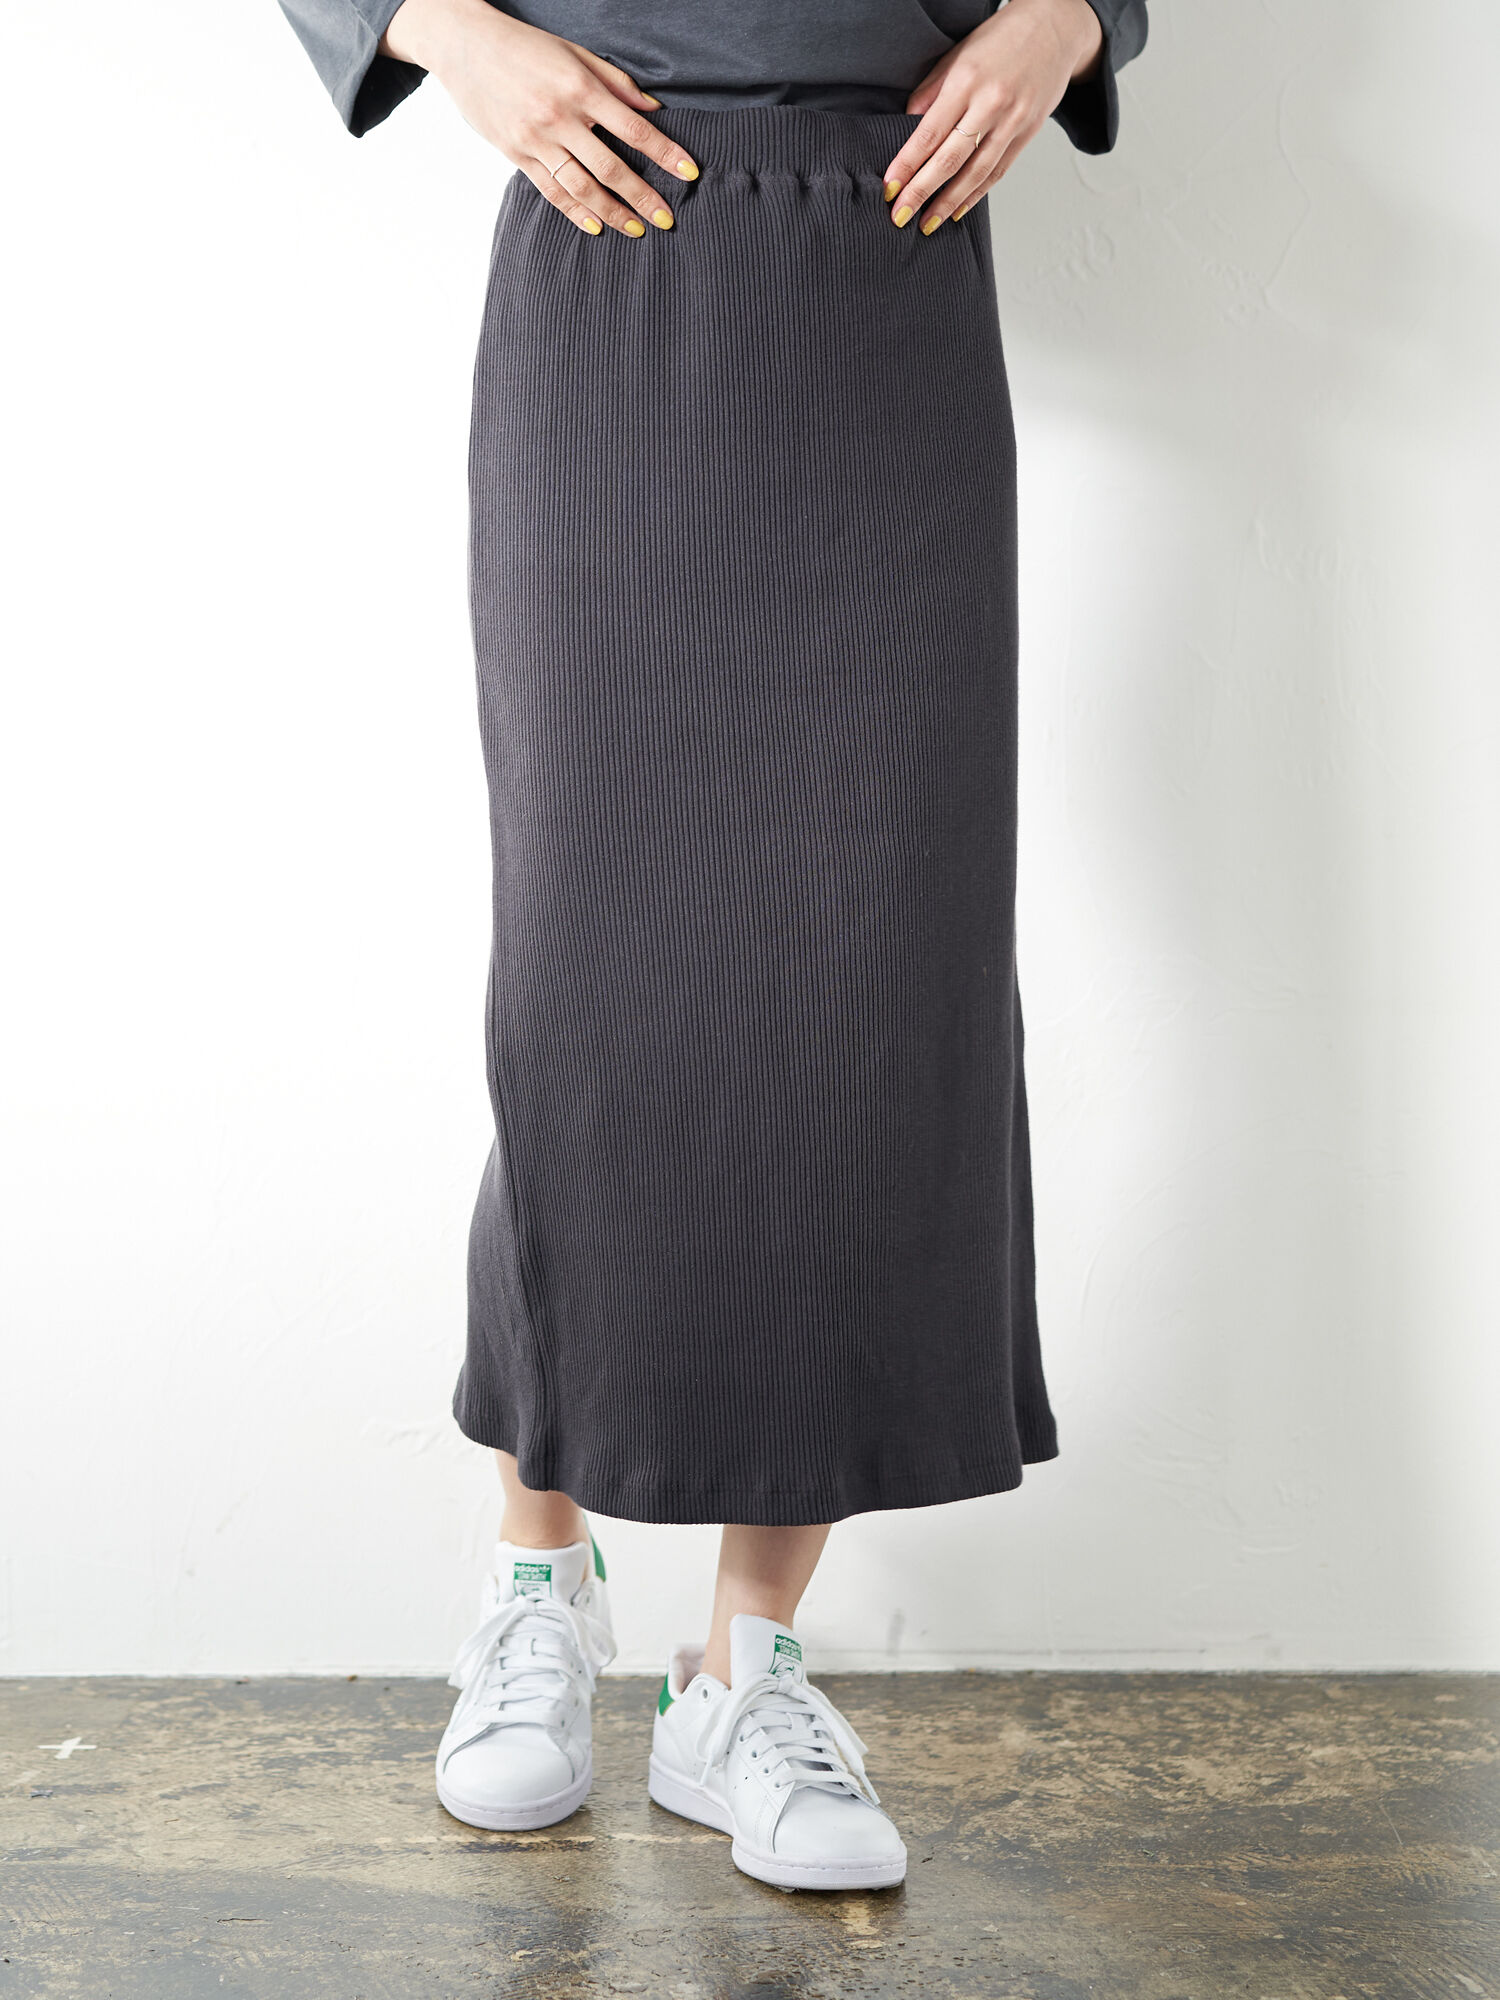 AMERICAN HOLIC(アメリカンホリック)のリブタイトロングスカート（スカート） ファッションレンタルのメチャカリ